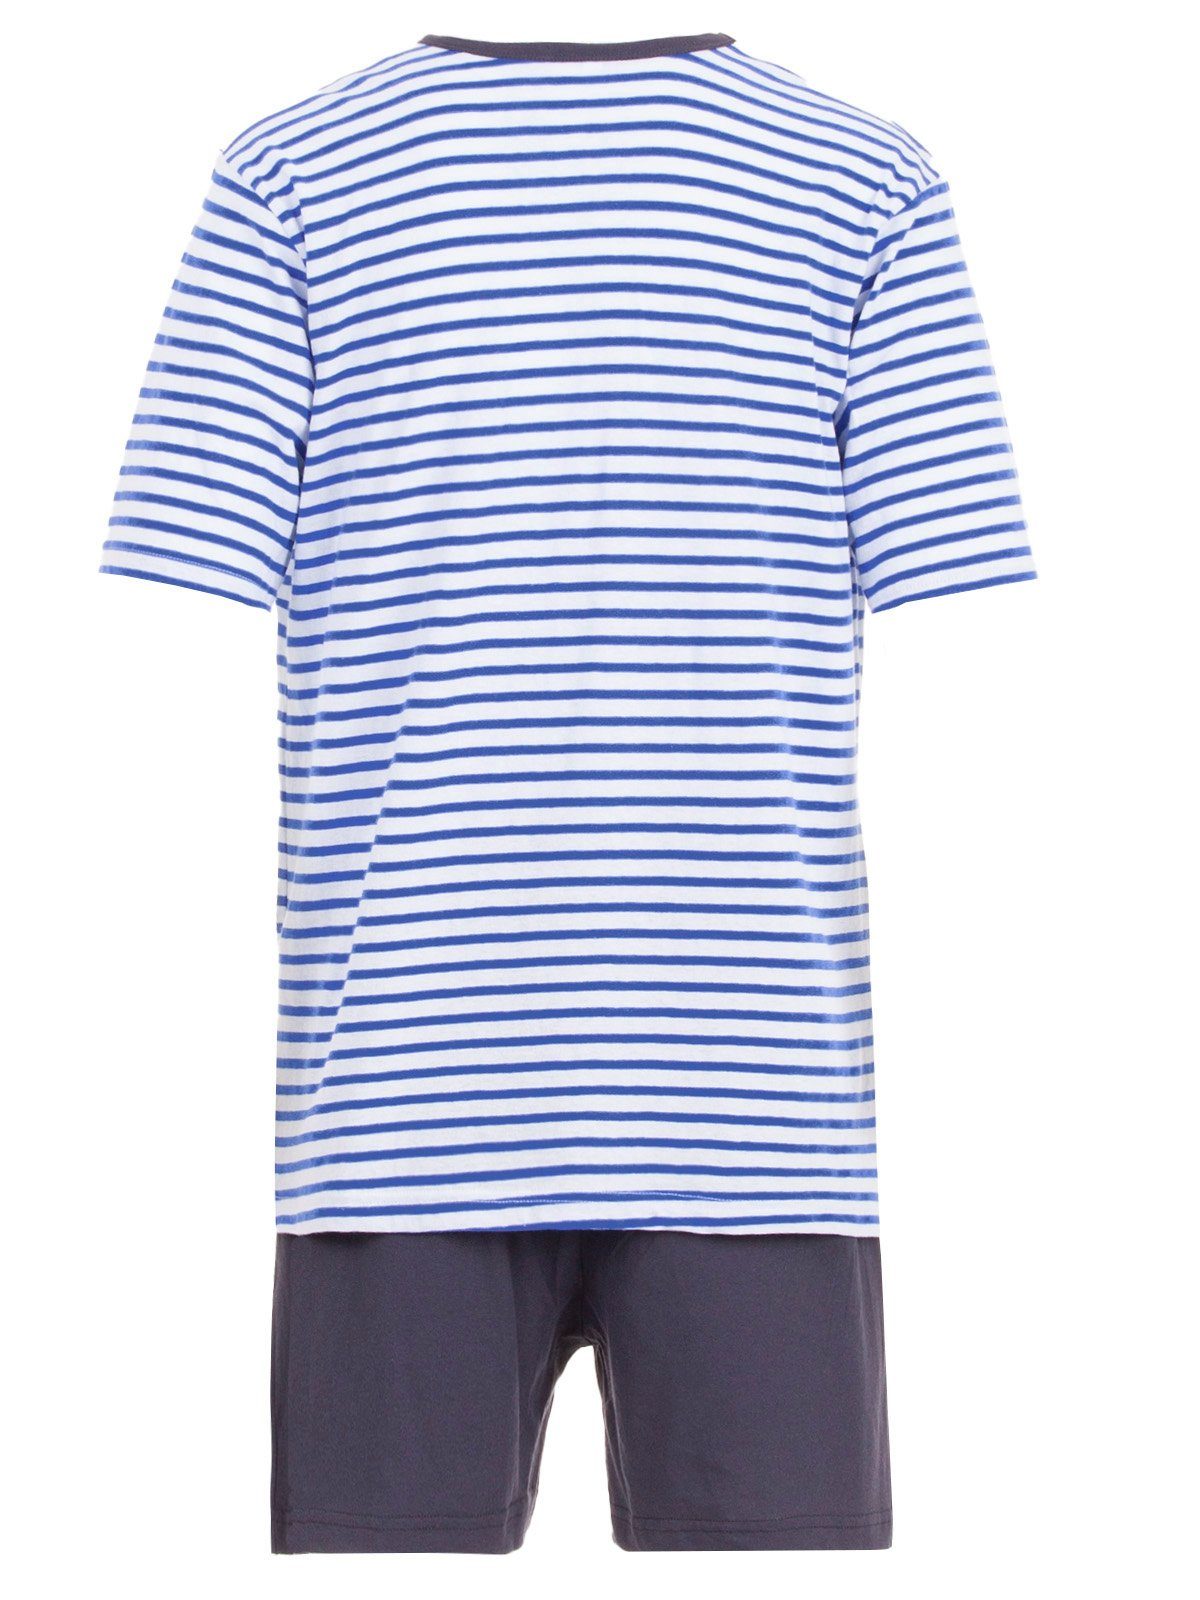 Gestreift Set blau Pyjama Shorty - Terre Henry Schlafanzug